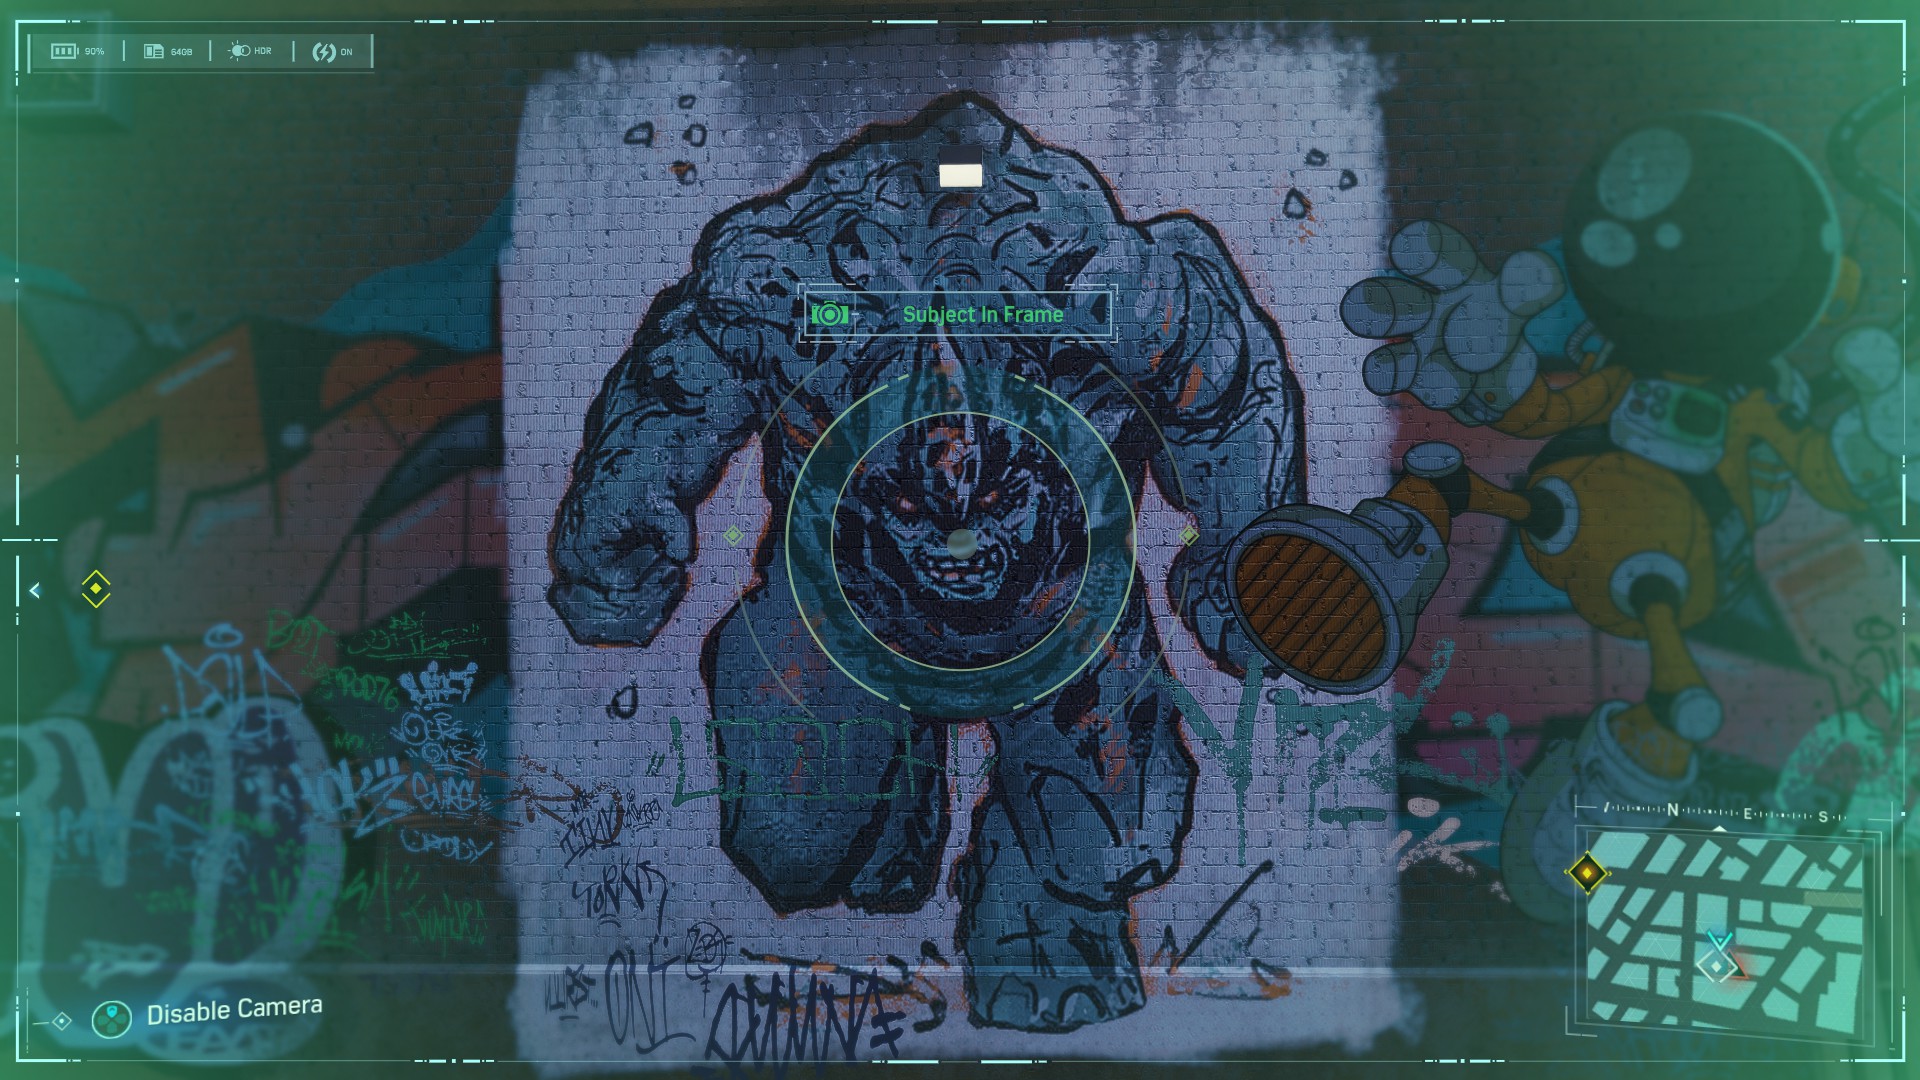 Spider-Man Secret Photo Op of Rhino graffiti